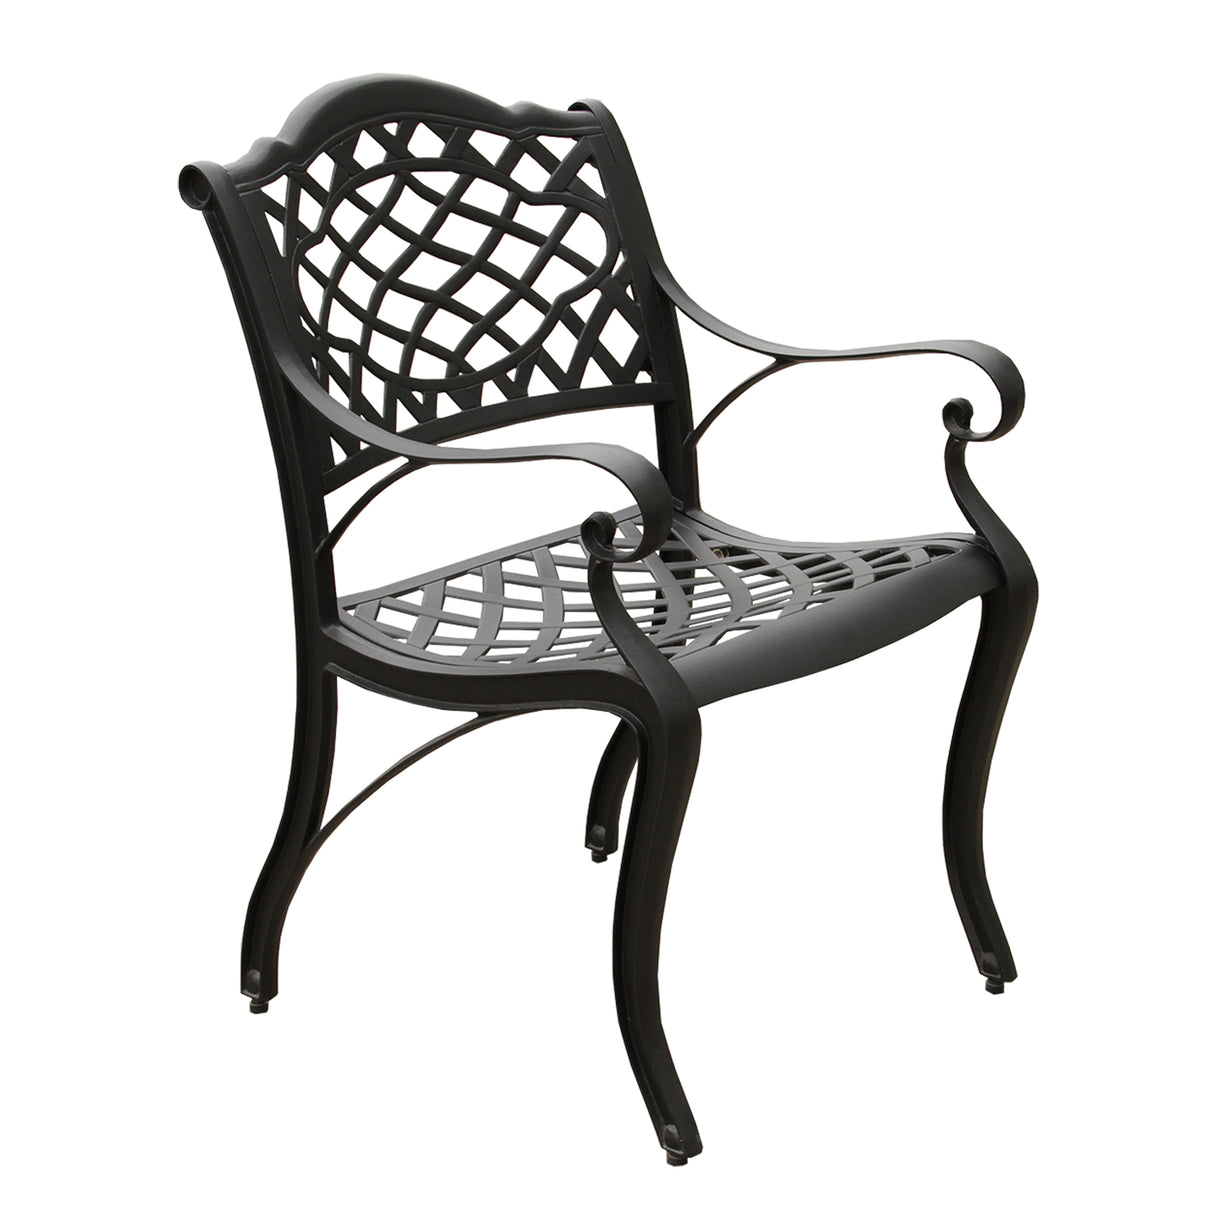 Outdoor Aluminum 7pc Black Rectangular Patio Dining Set and Six Chairs